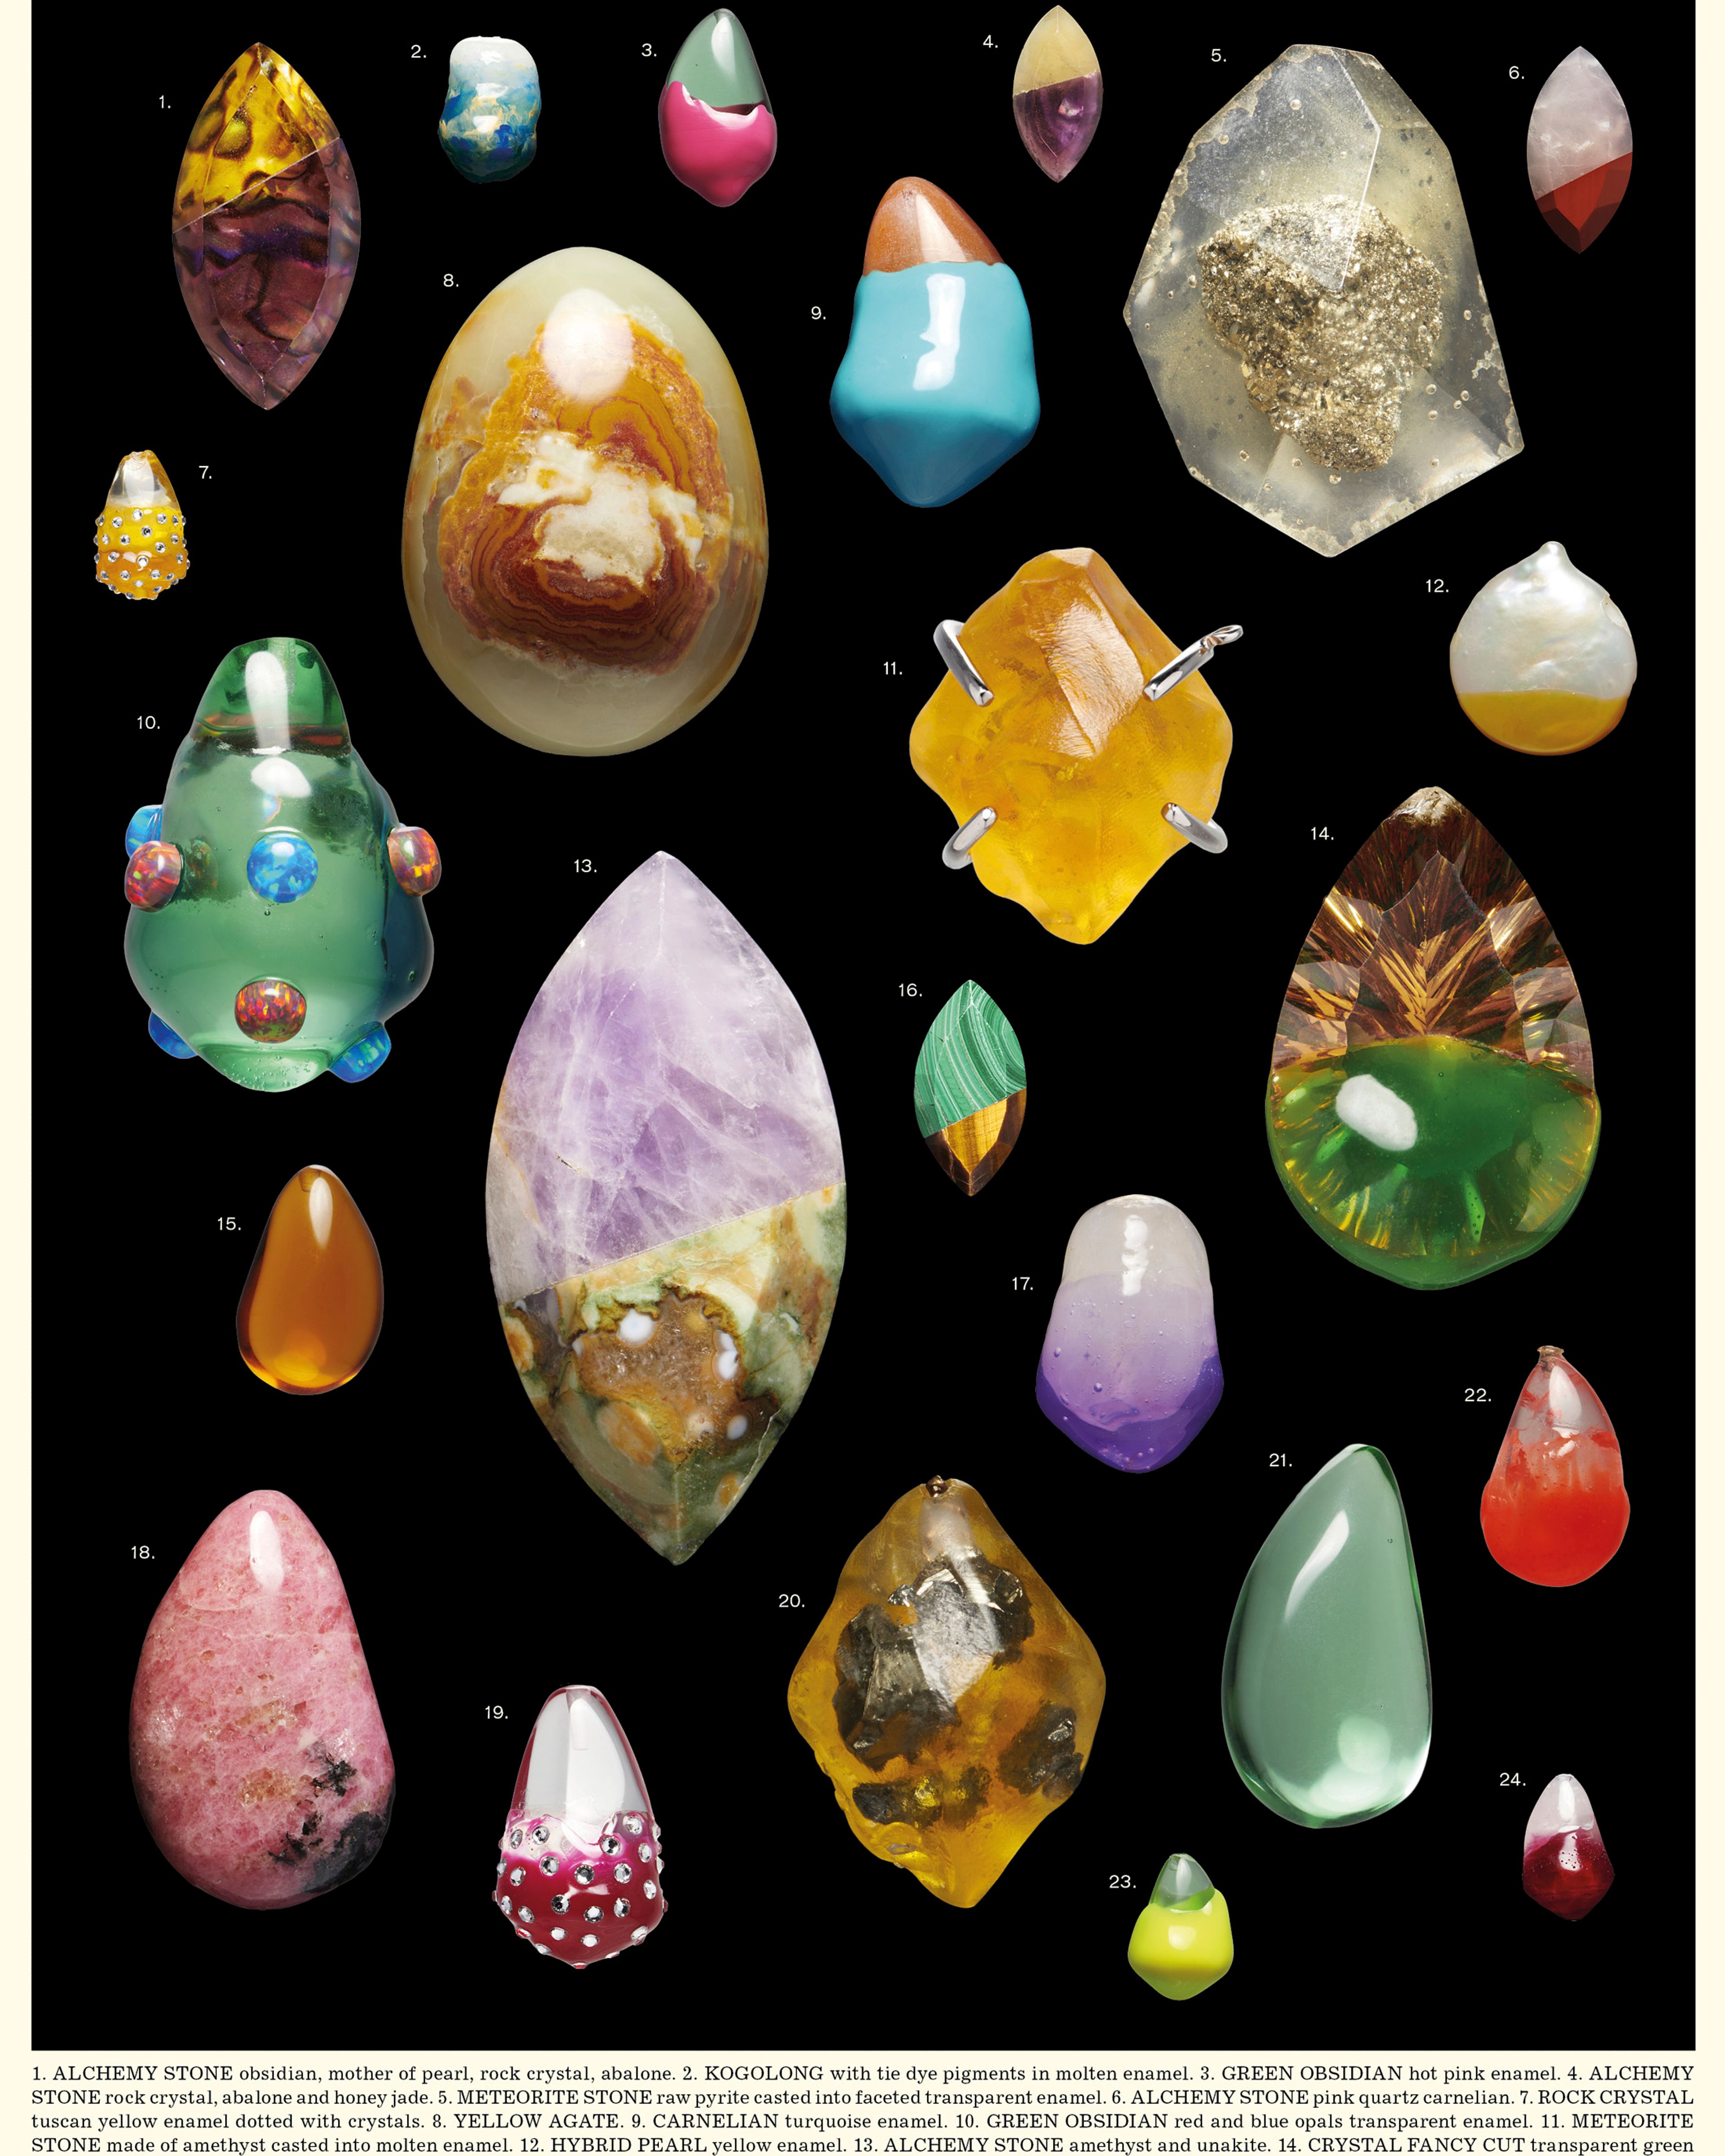 Panconesi, Encyclopedia of Stones - Romain Roucoules